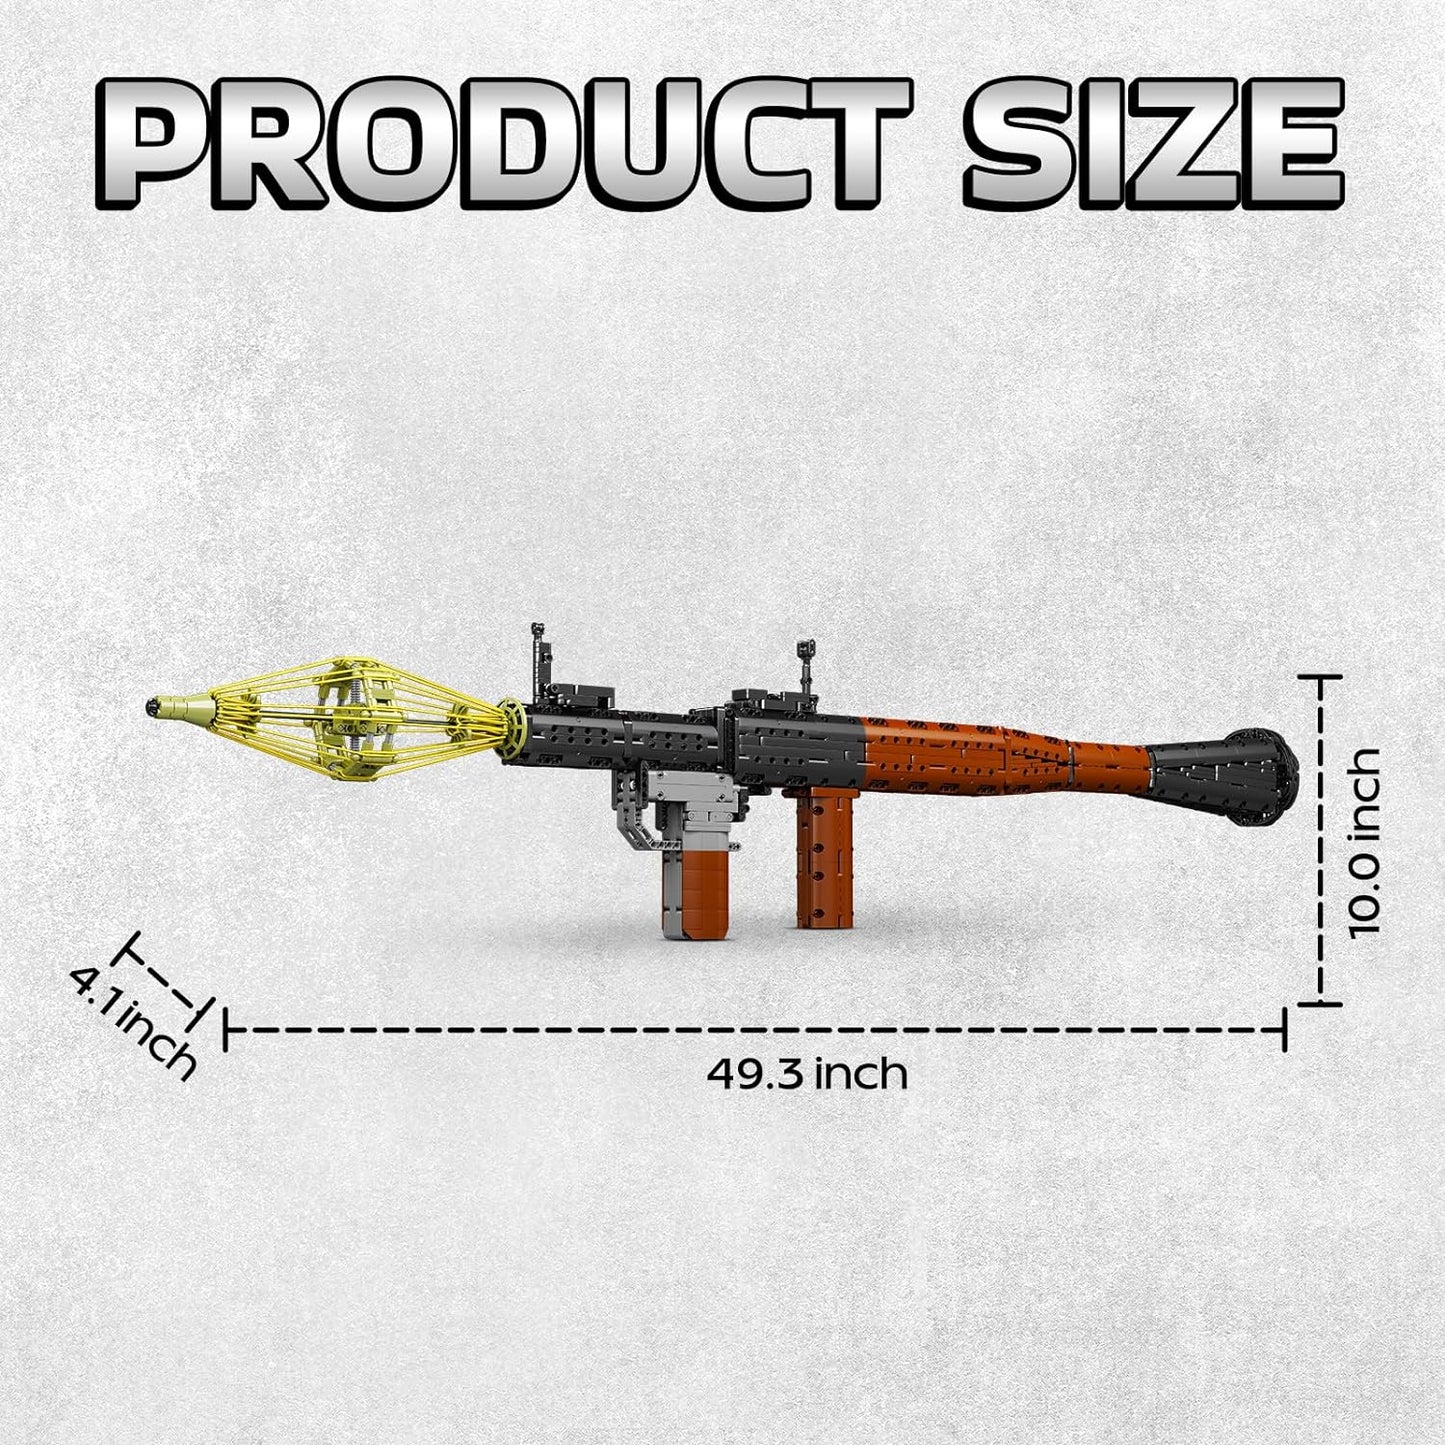 1:1 Rocket Launcher Building Bricks Gun Collection Toy - 1706+ PCS Model Gun Building Block Sniper Set Shootable - Gift Collectible Surprises